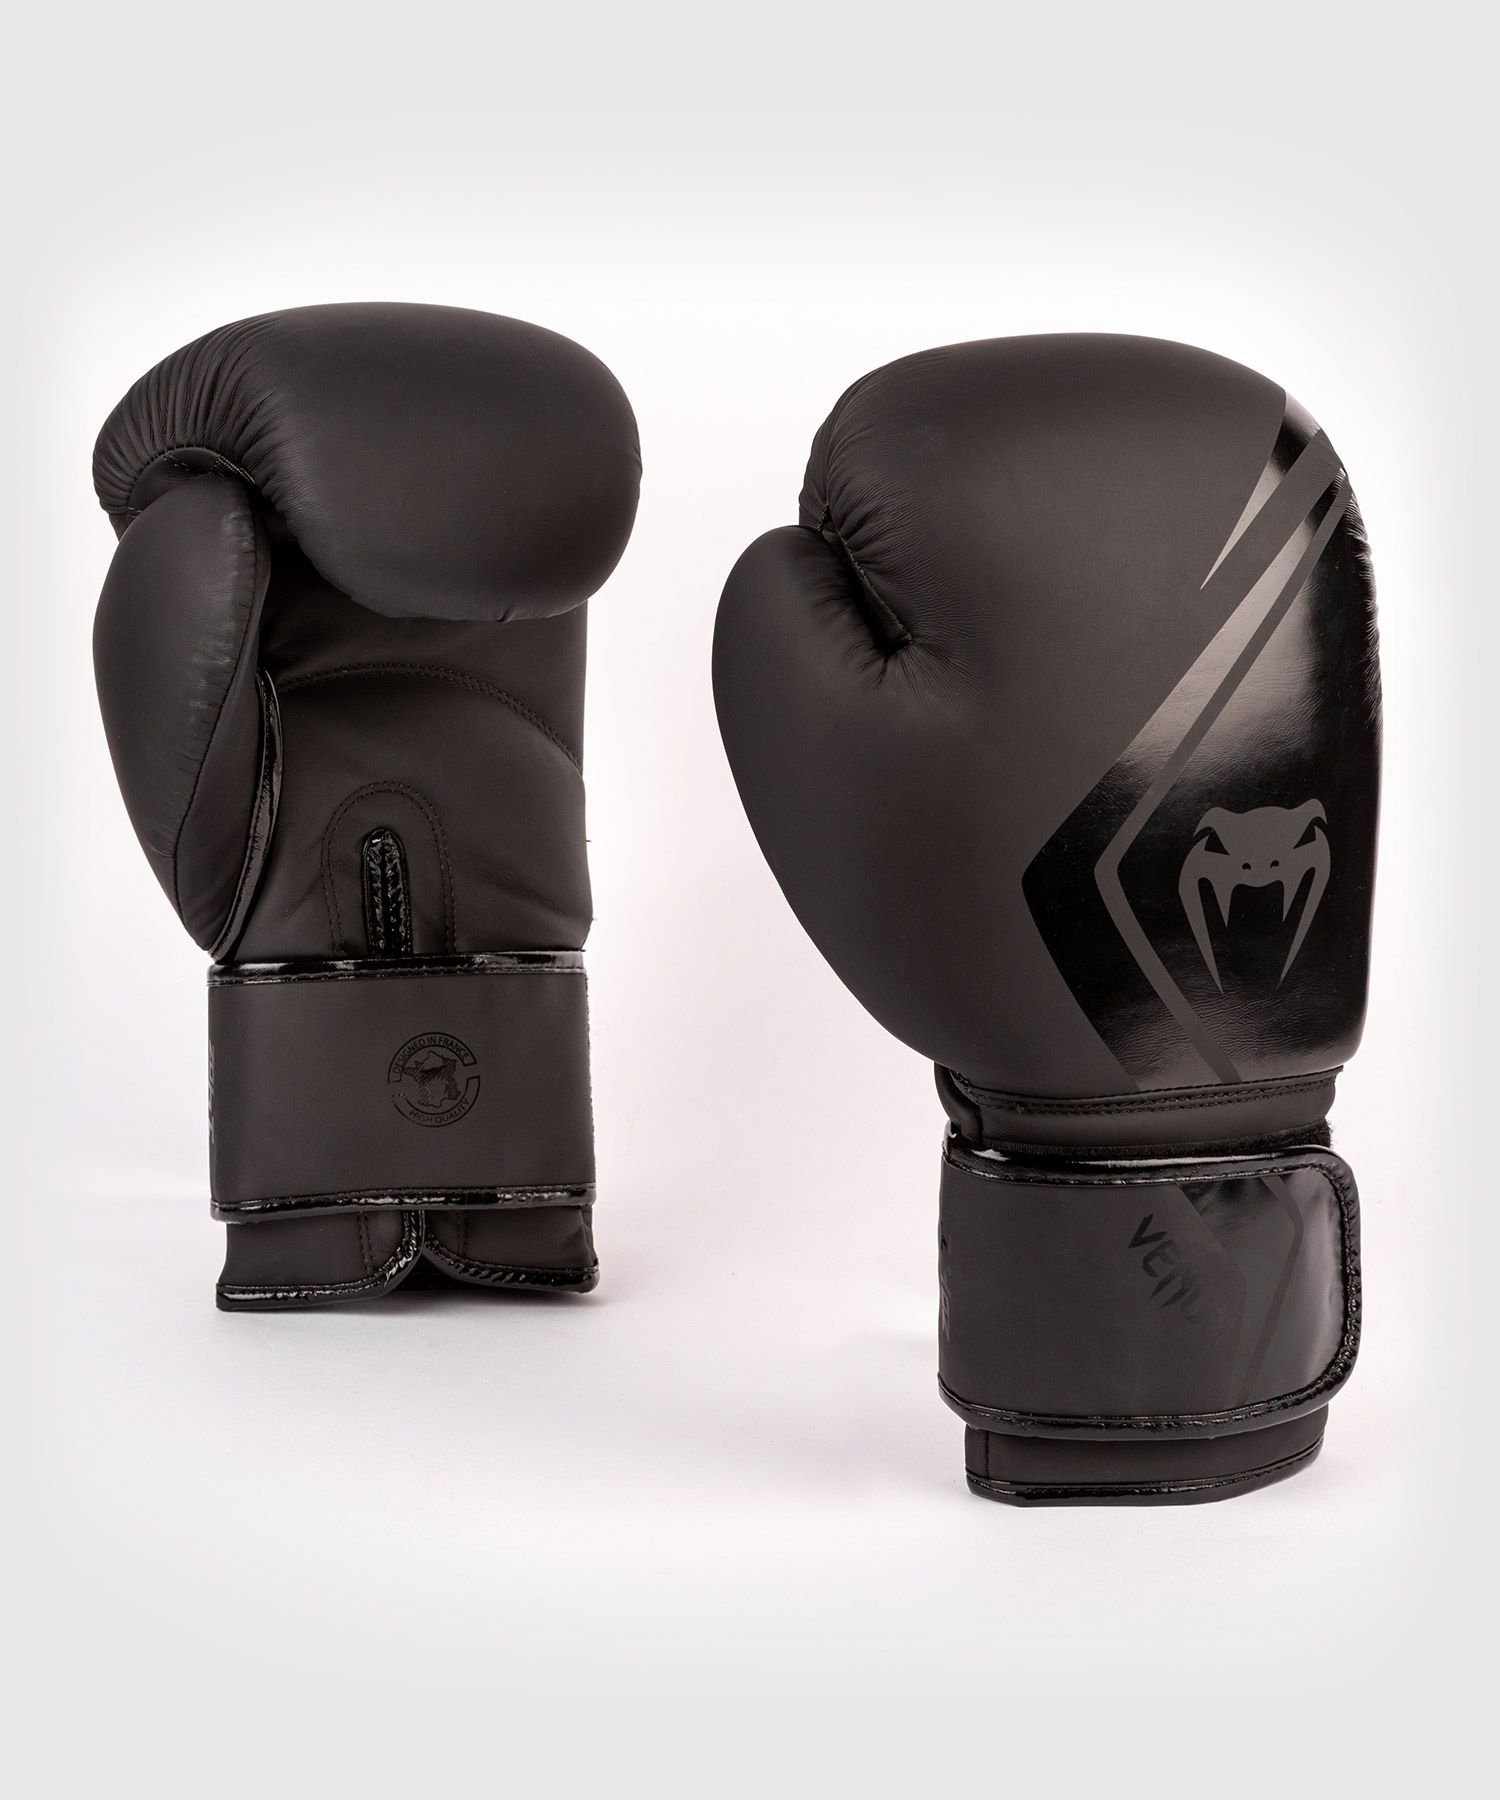 Venum Contender 2.0 Boxing Gloves 